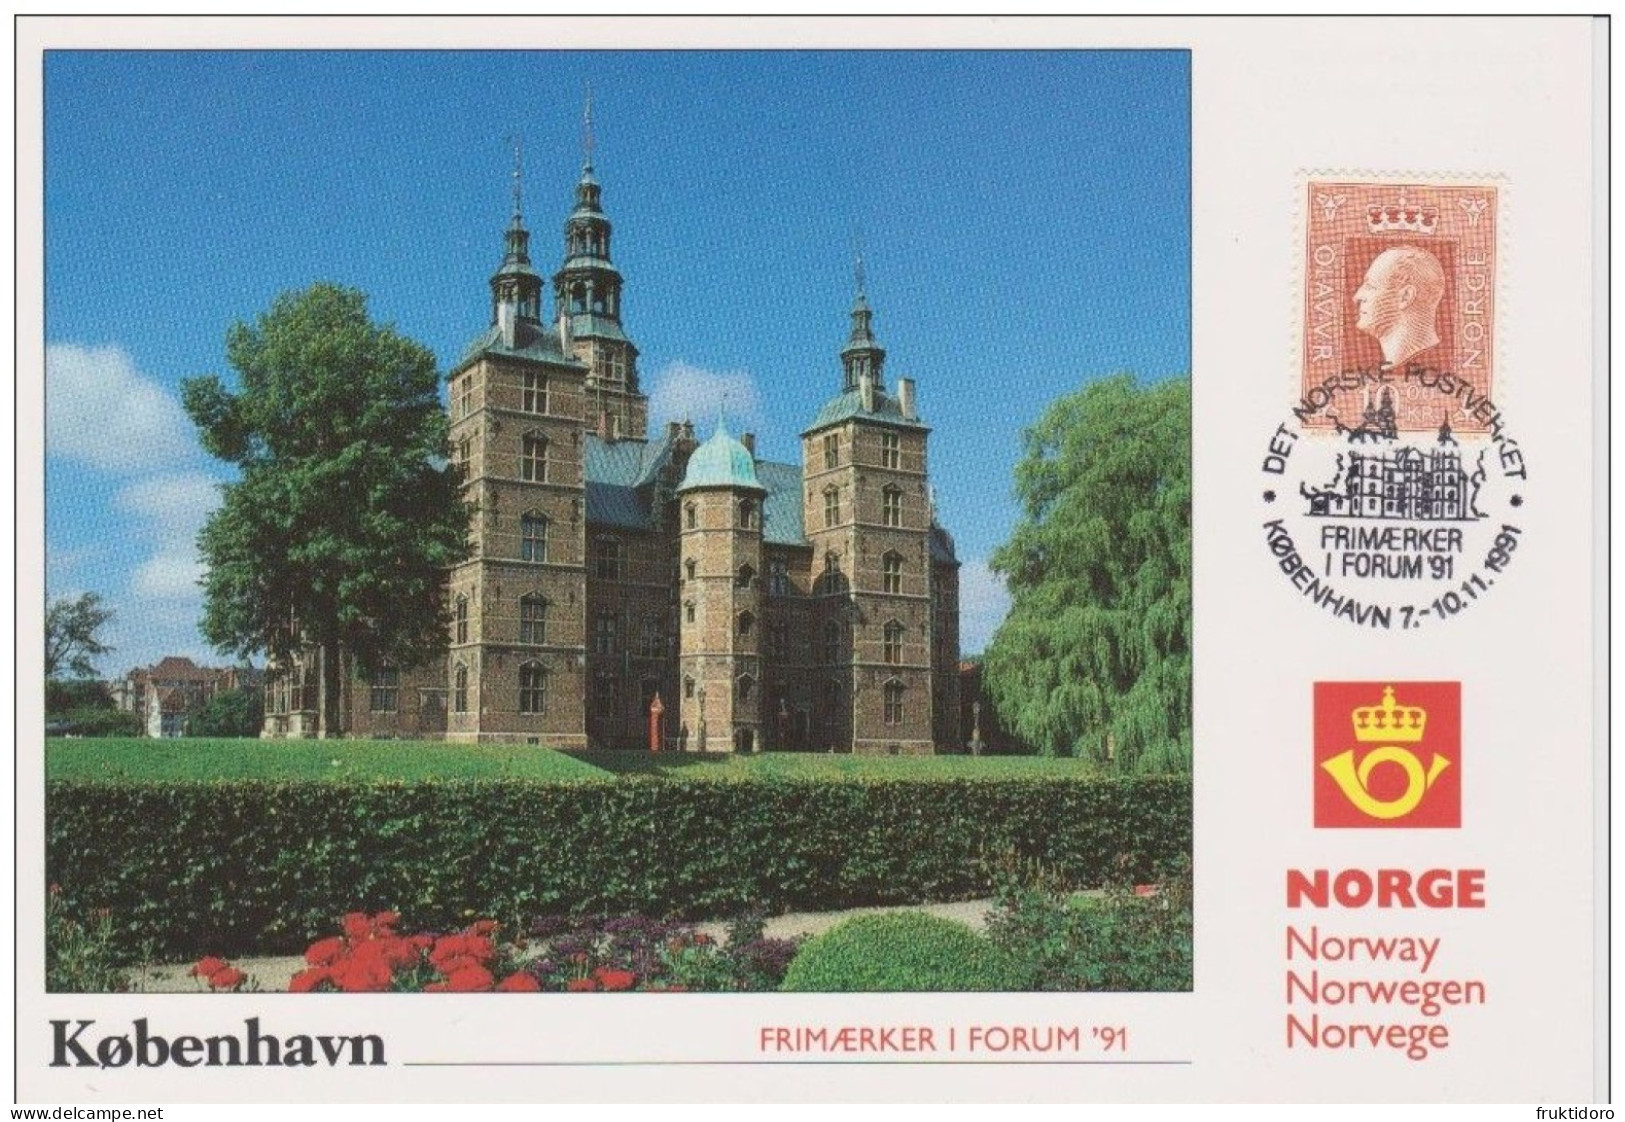 Norway Exhibition Cards 1991 Spring Stampex 1991 (London) - Philatelia (Cologne) Mi 592 King Olav V